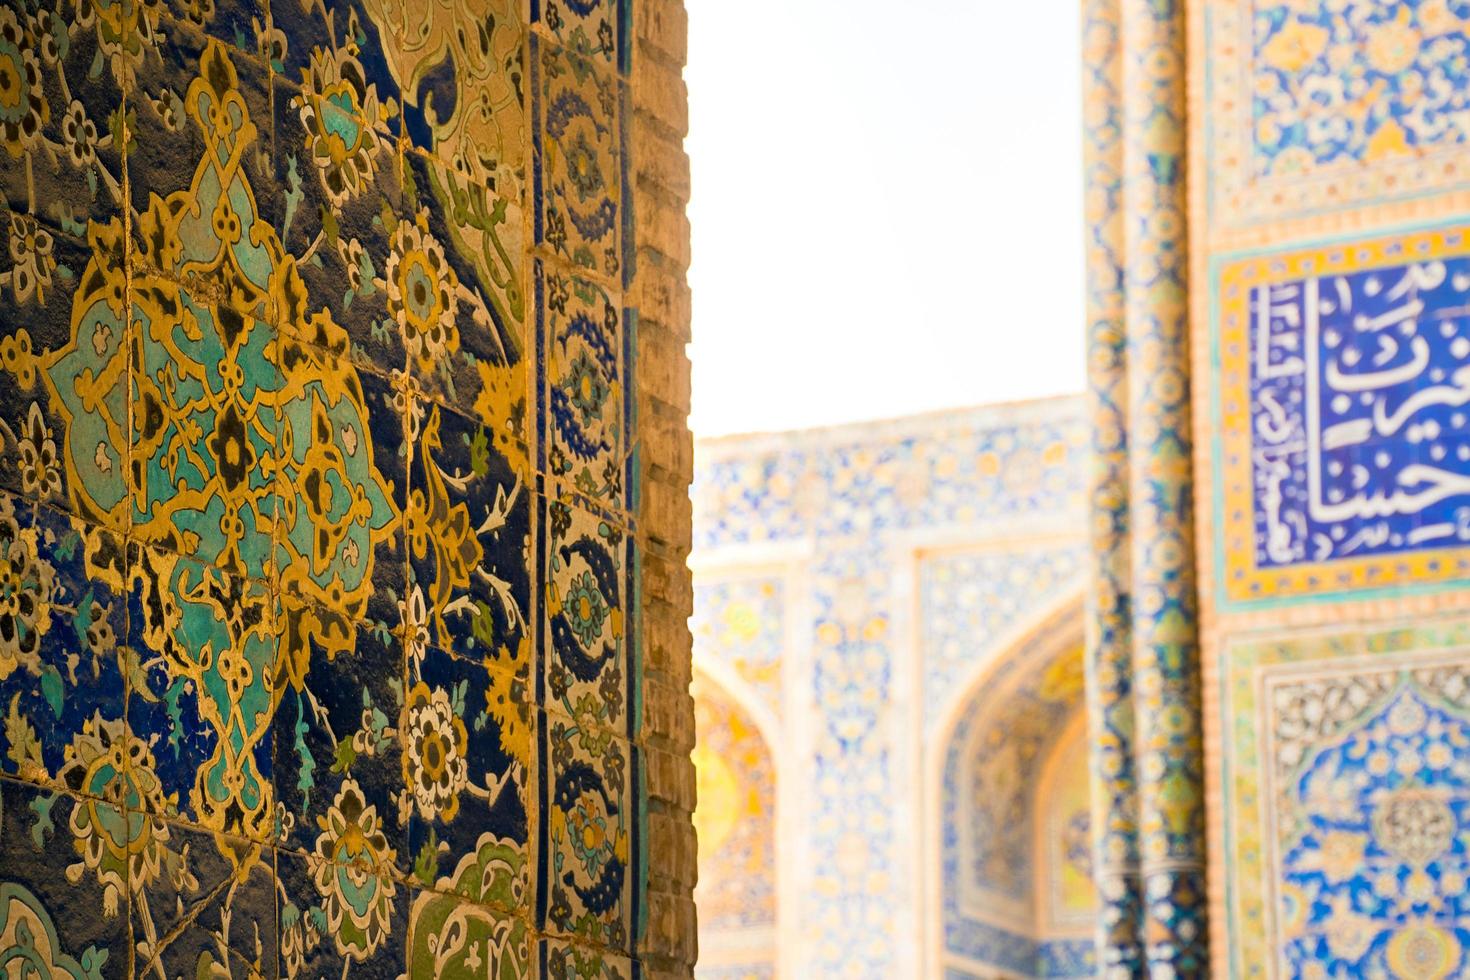 obra de arte en paredes en patio viernes mezquita , jame mezquita de isfahan foto